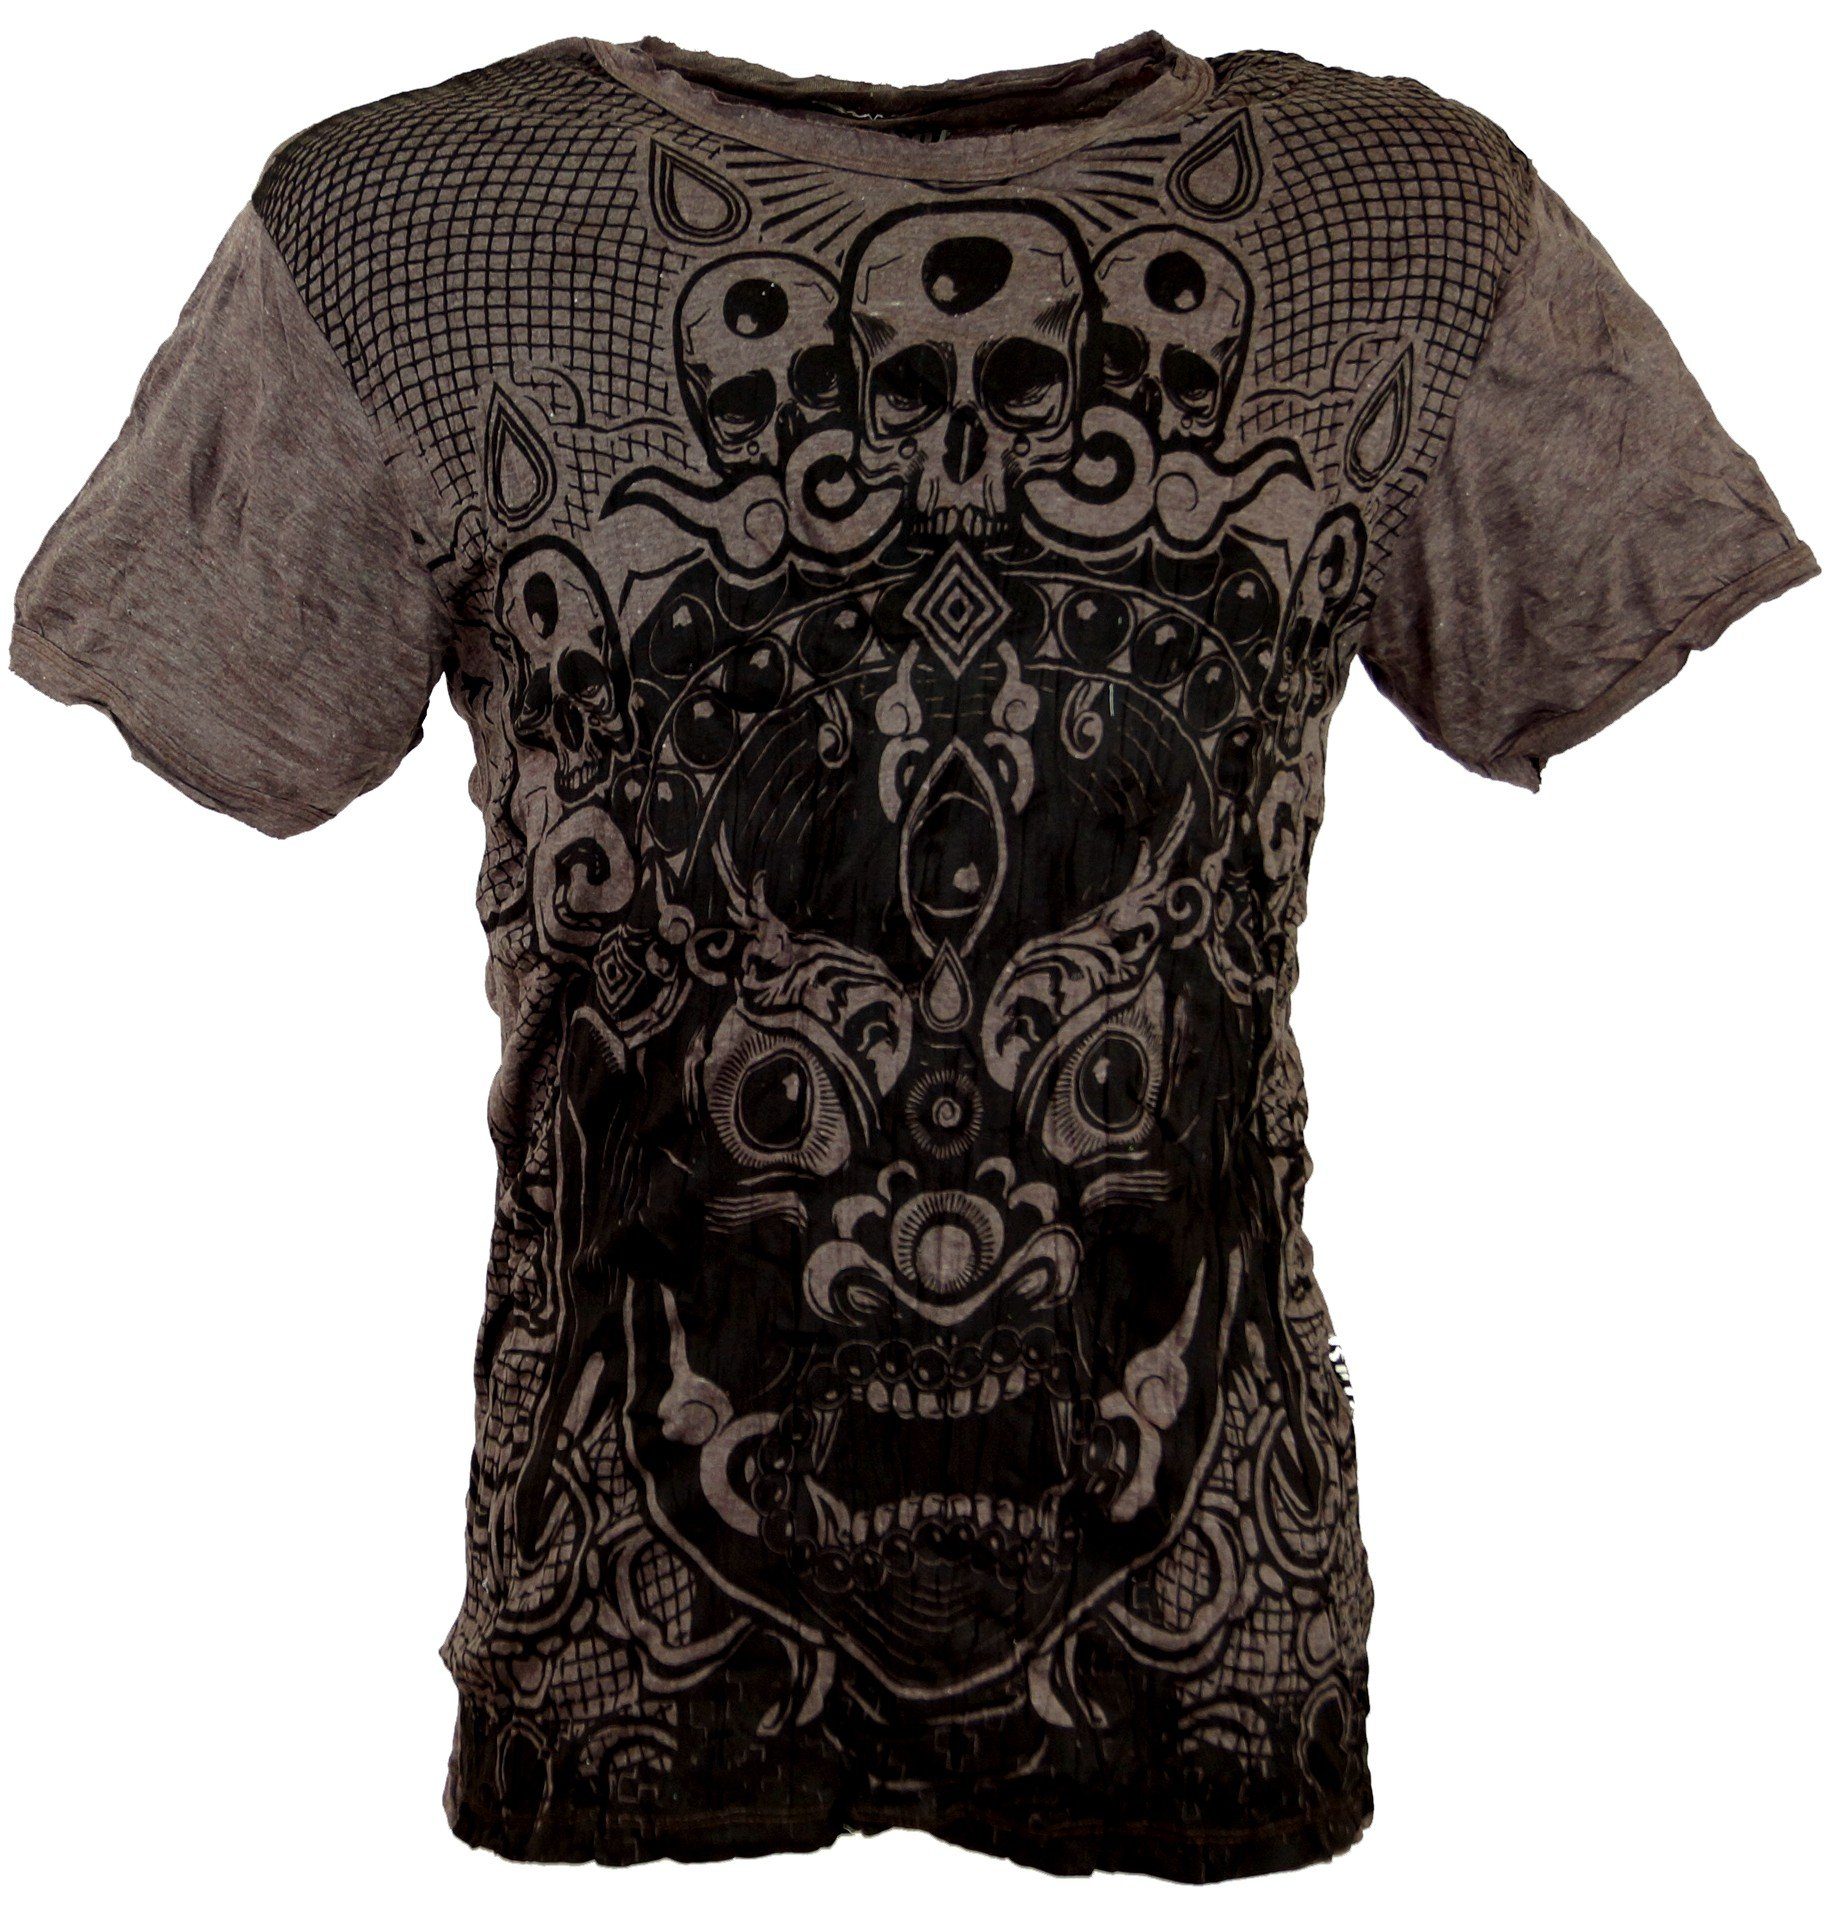 Dämon - Guru-Shop taupe Style, T-Shirt Bekleidung Goa Festival, Sure alternative T-Shirt